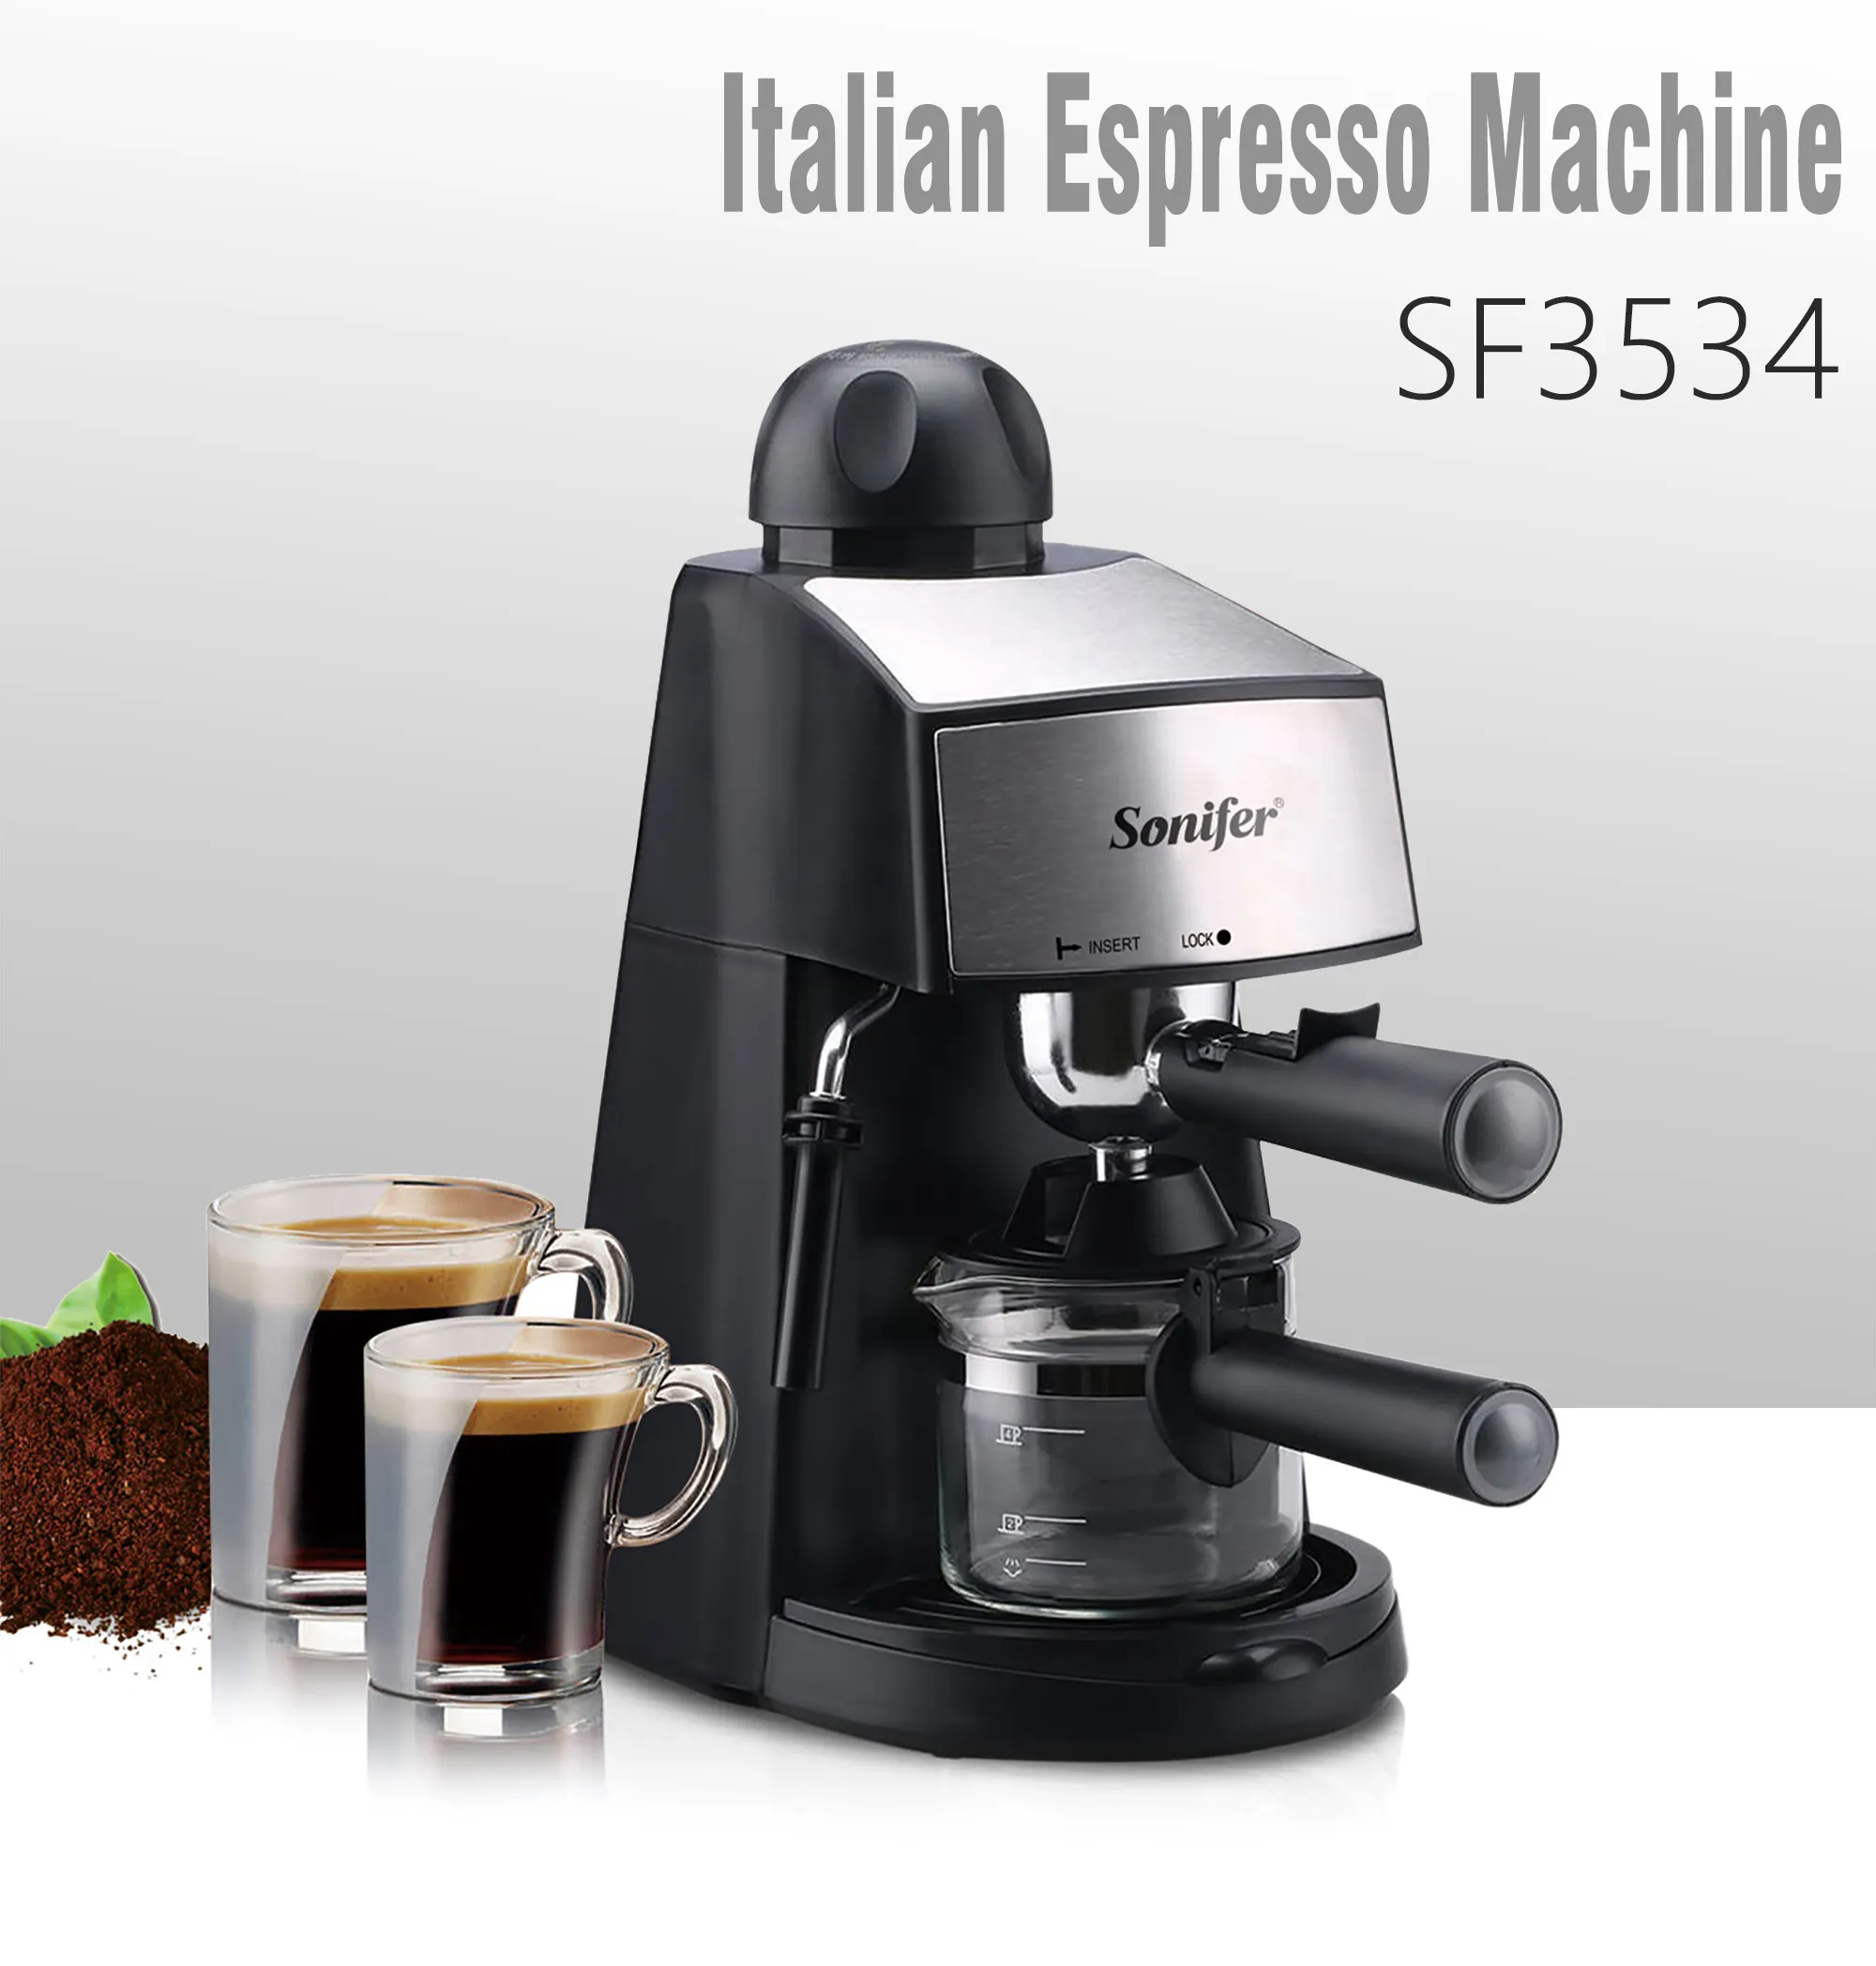 https://www.dhresource.com/webp/m/0x0s/f2-albu-g14-M01-39-87-rBValF9Yi6iAYV4UAA8HLME_K58918.jpg/240ml-semi-automatic-espresso-electric-coffee.jpg